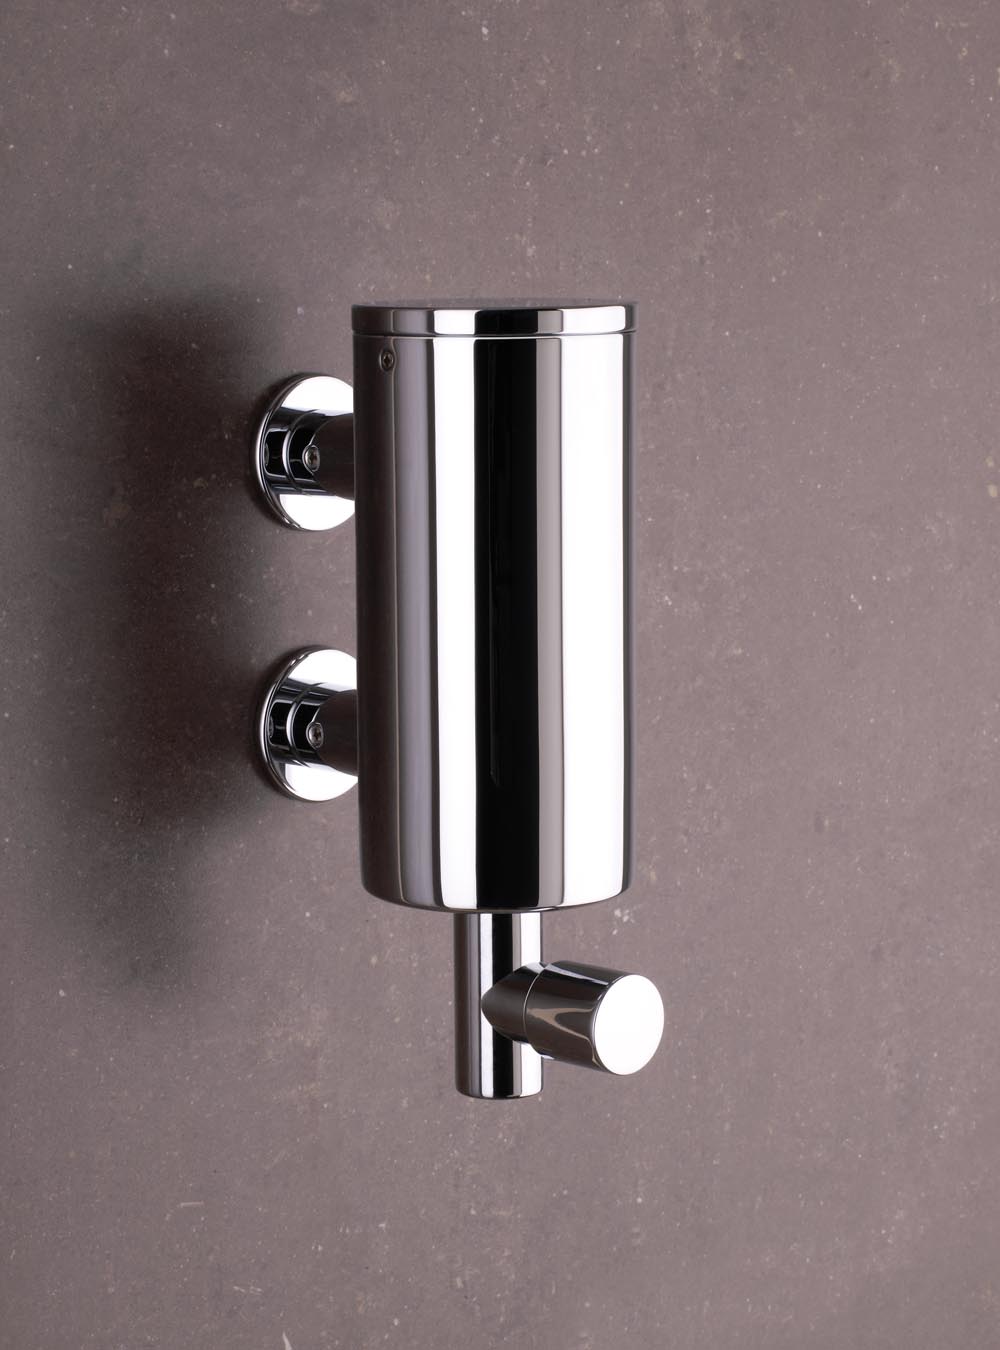 Vola Arne Jacobsen Wall Soap Dispenser 0.25L